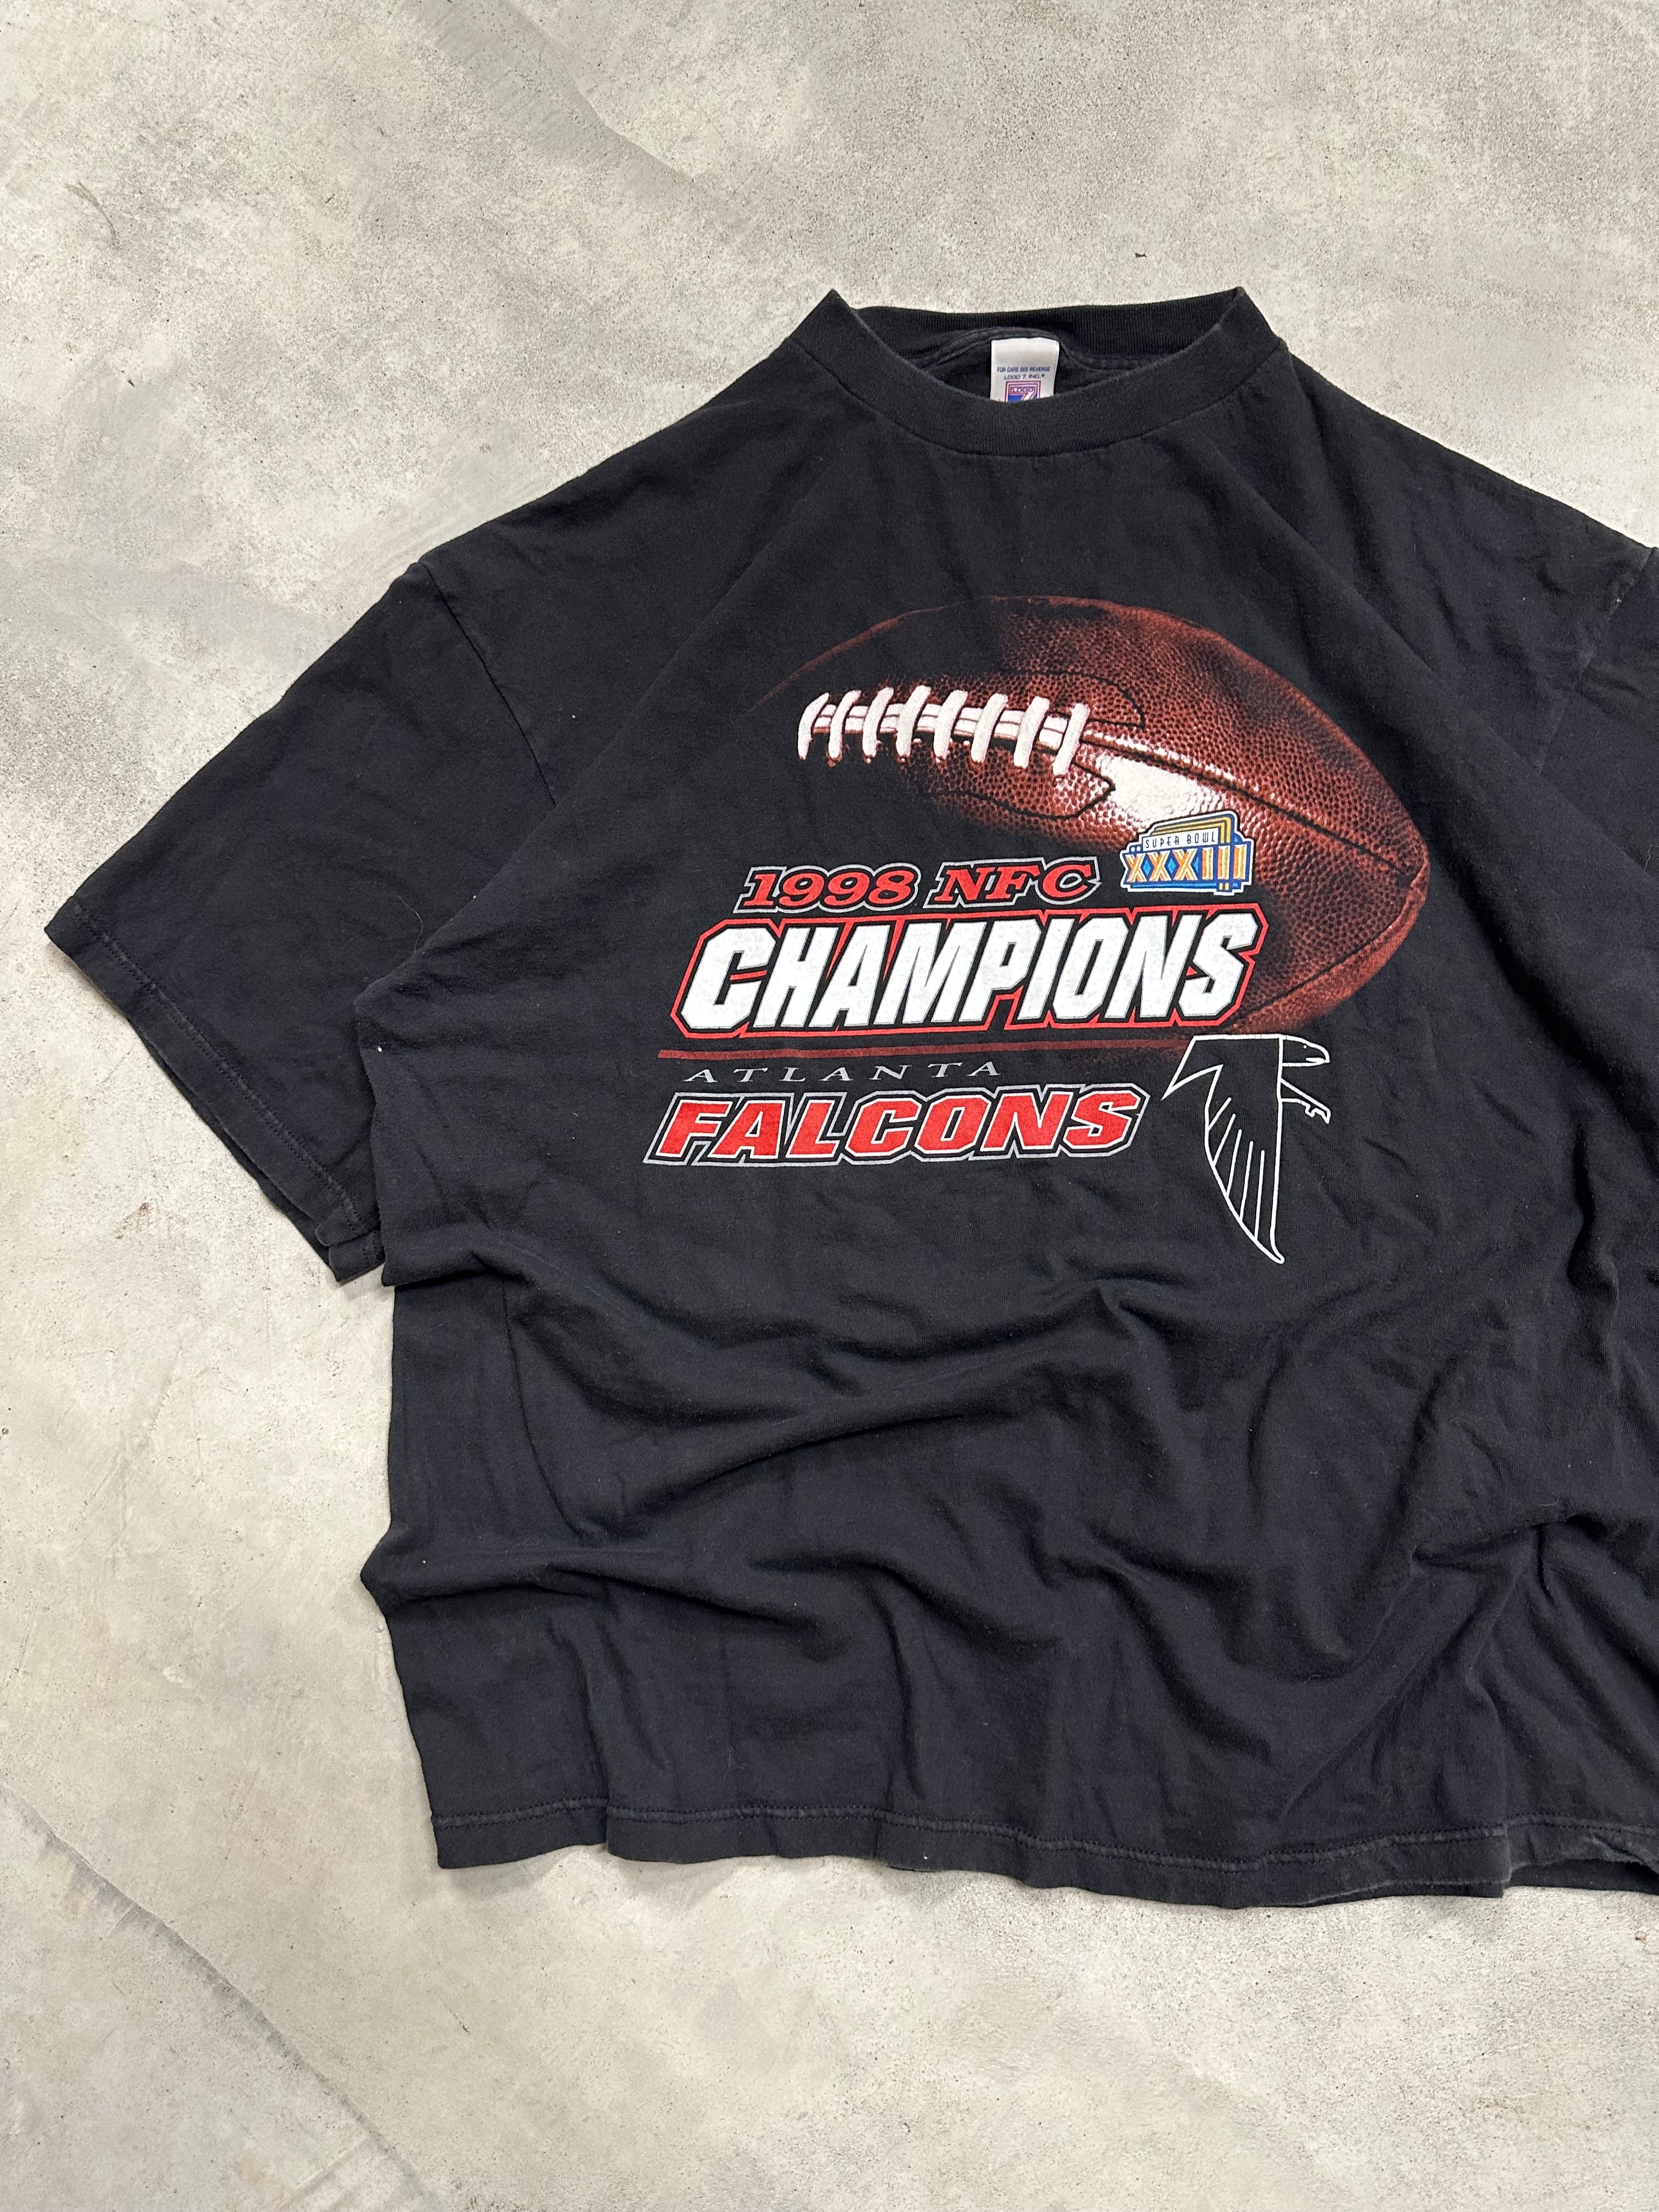 1998 Atlanta Falcons NFC Champions T-Shirt